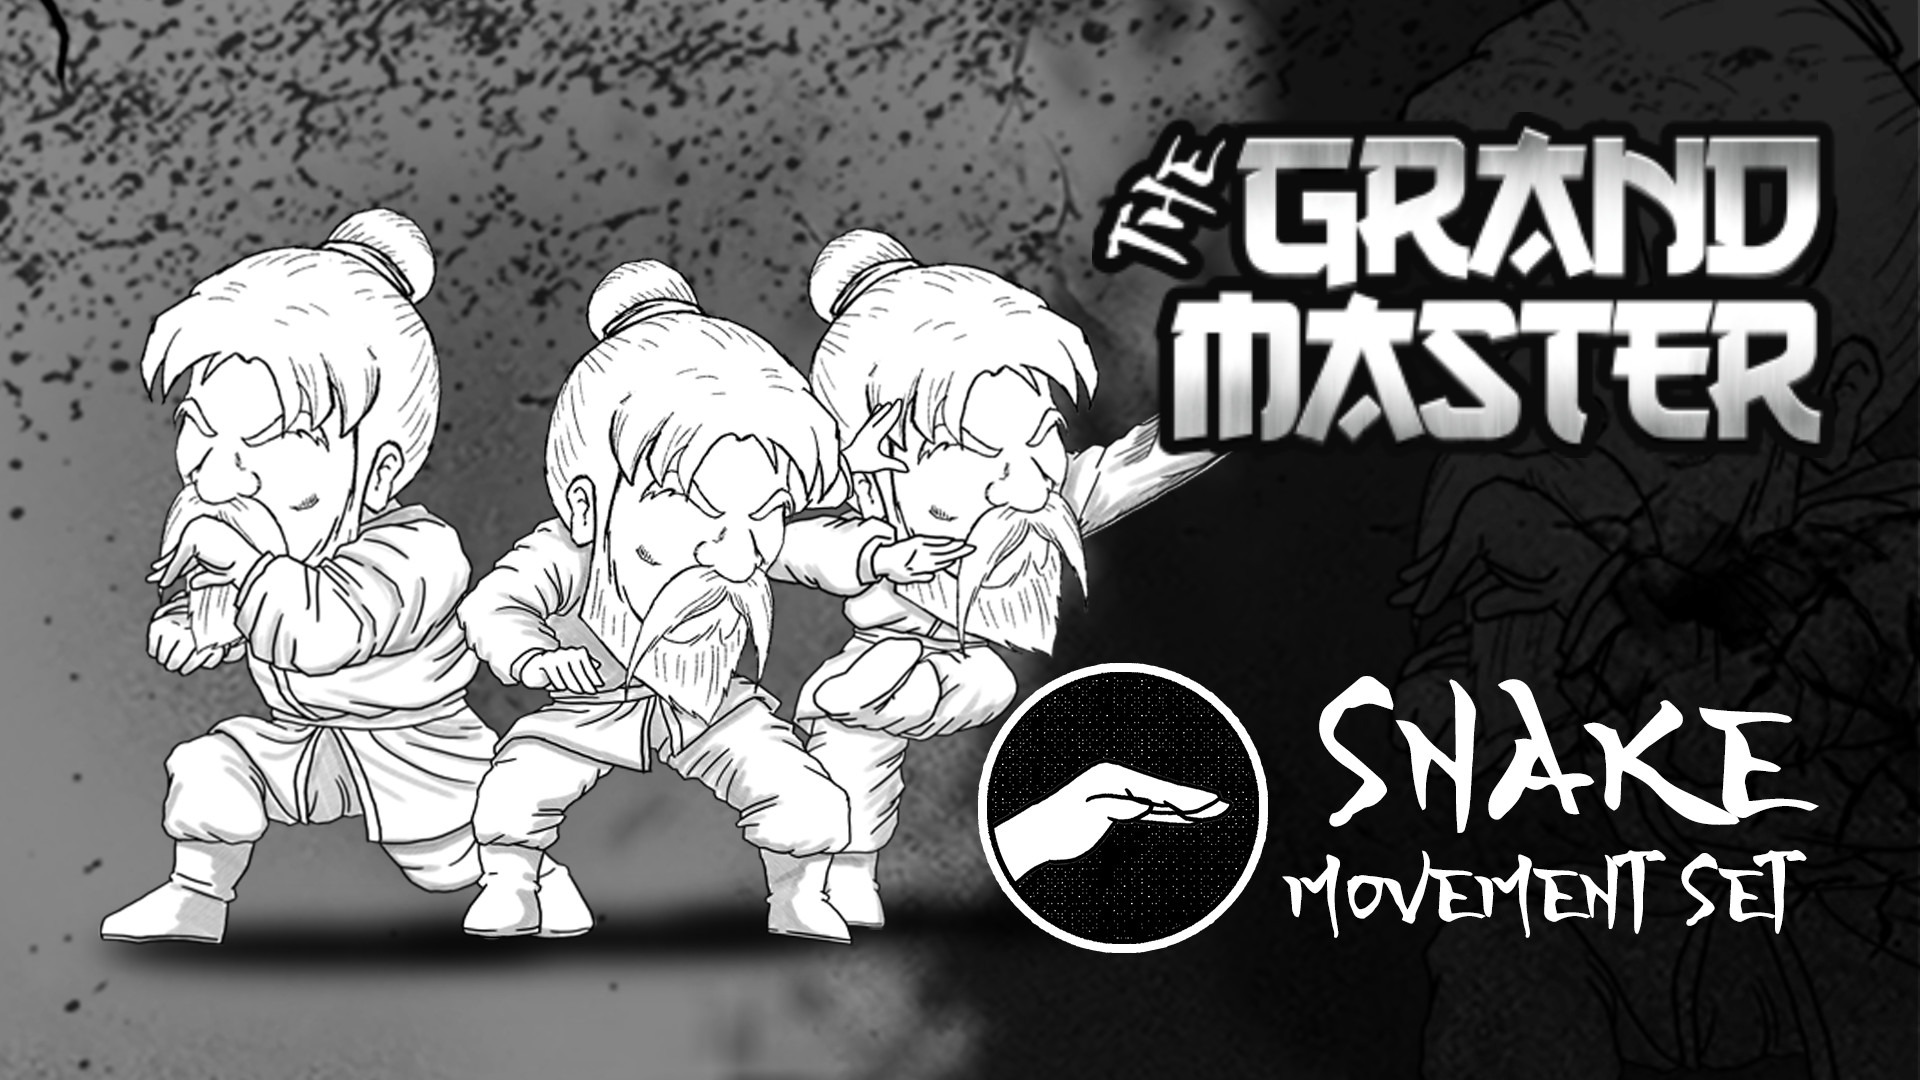 The Grandmaster - Snake Movement Set Featured Screenshot #1